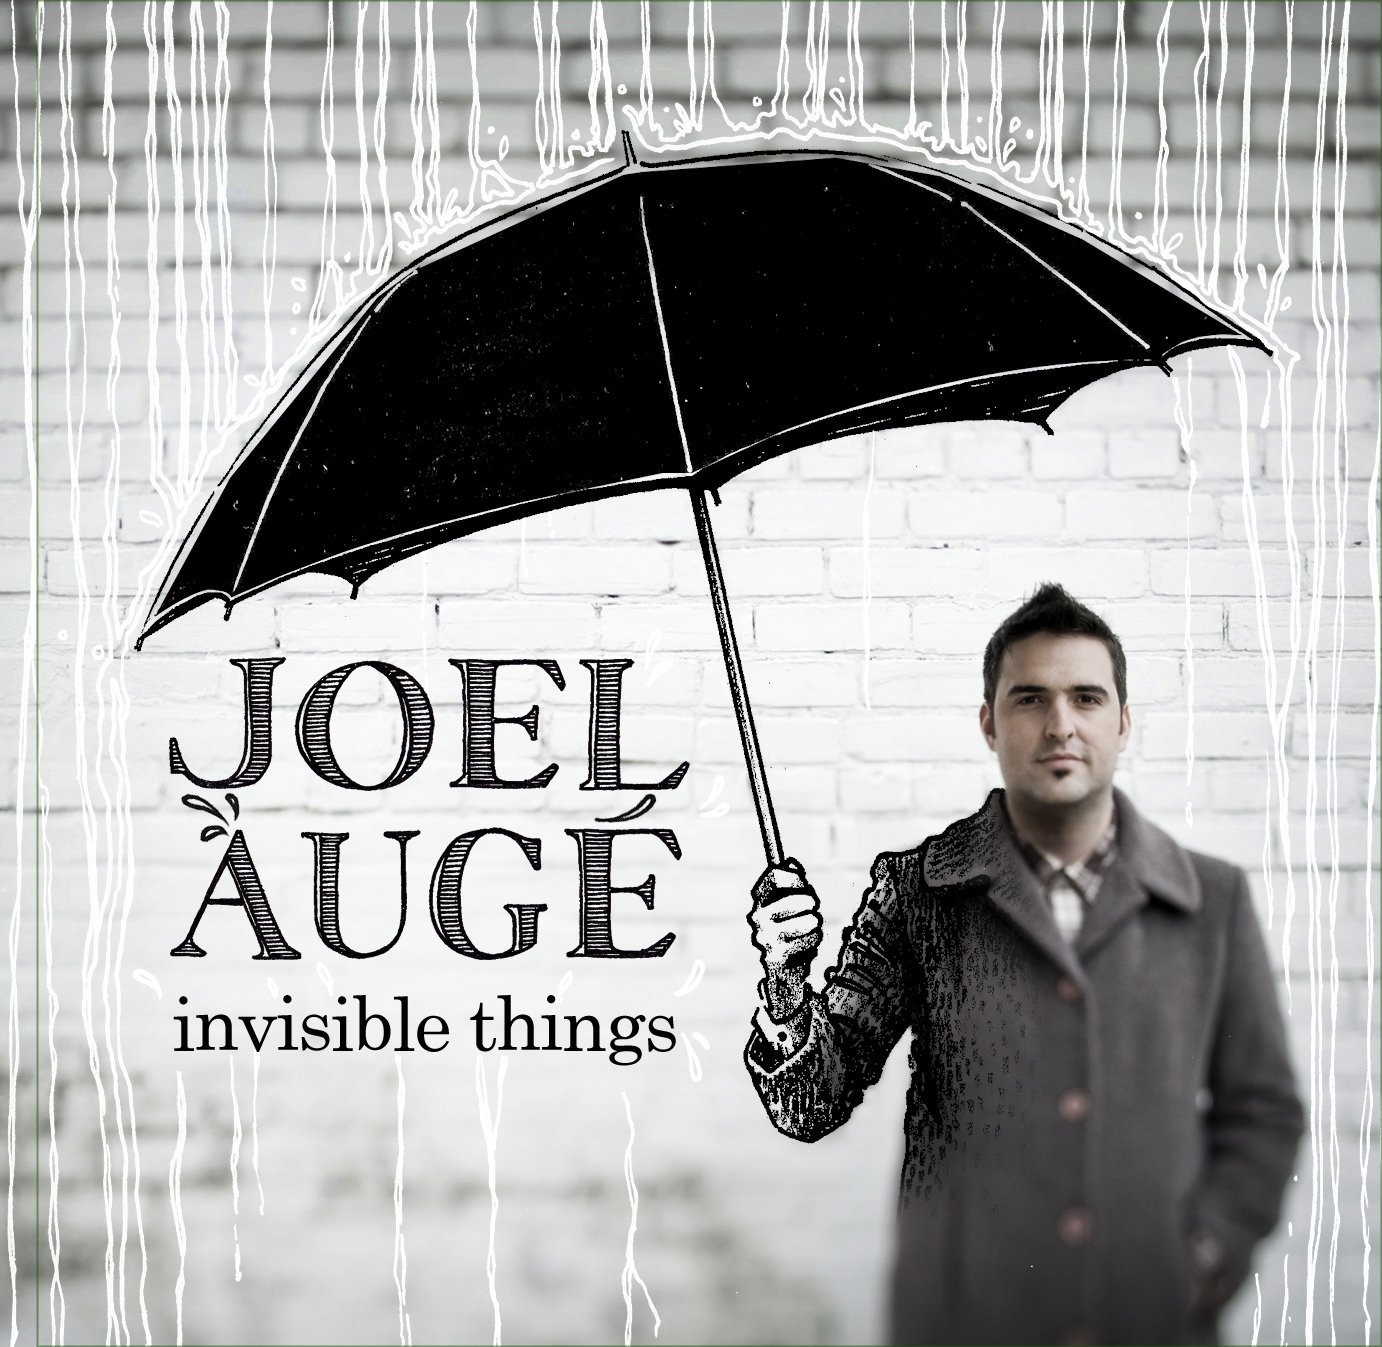 Joel Auge - invisible things (CD)